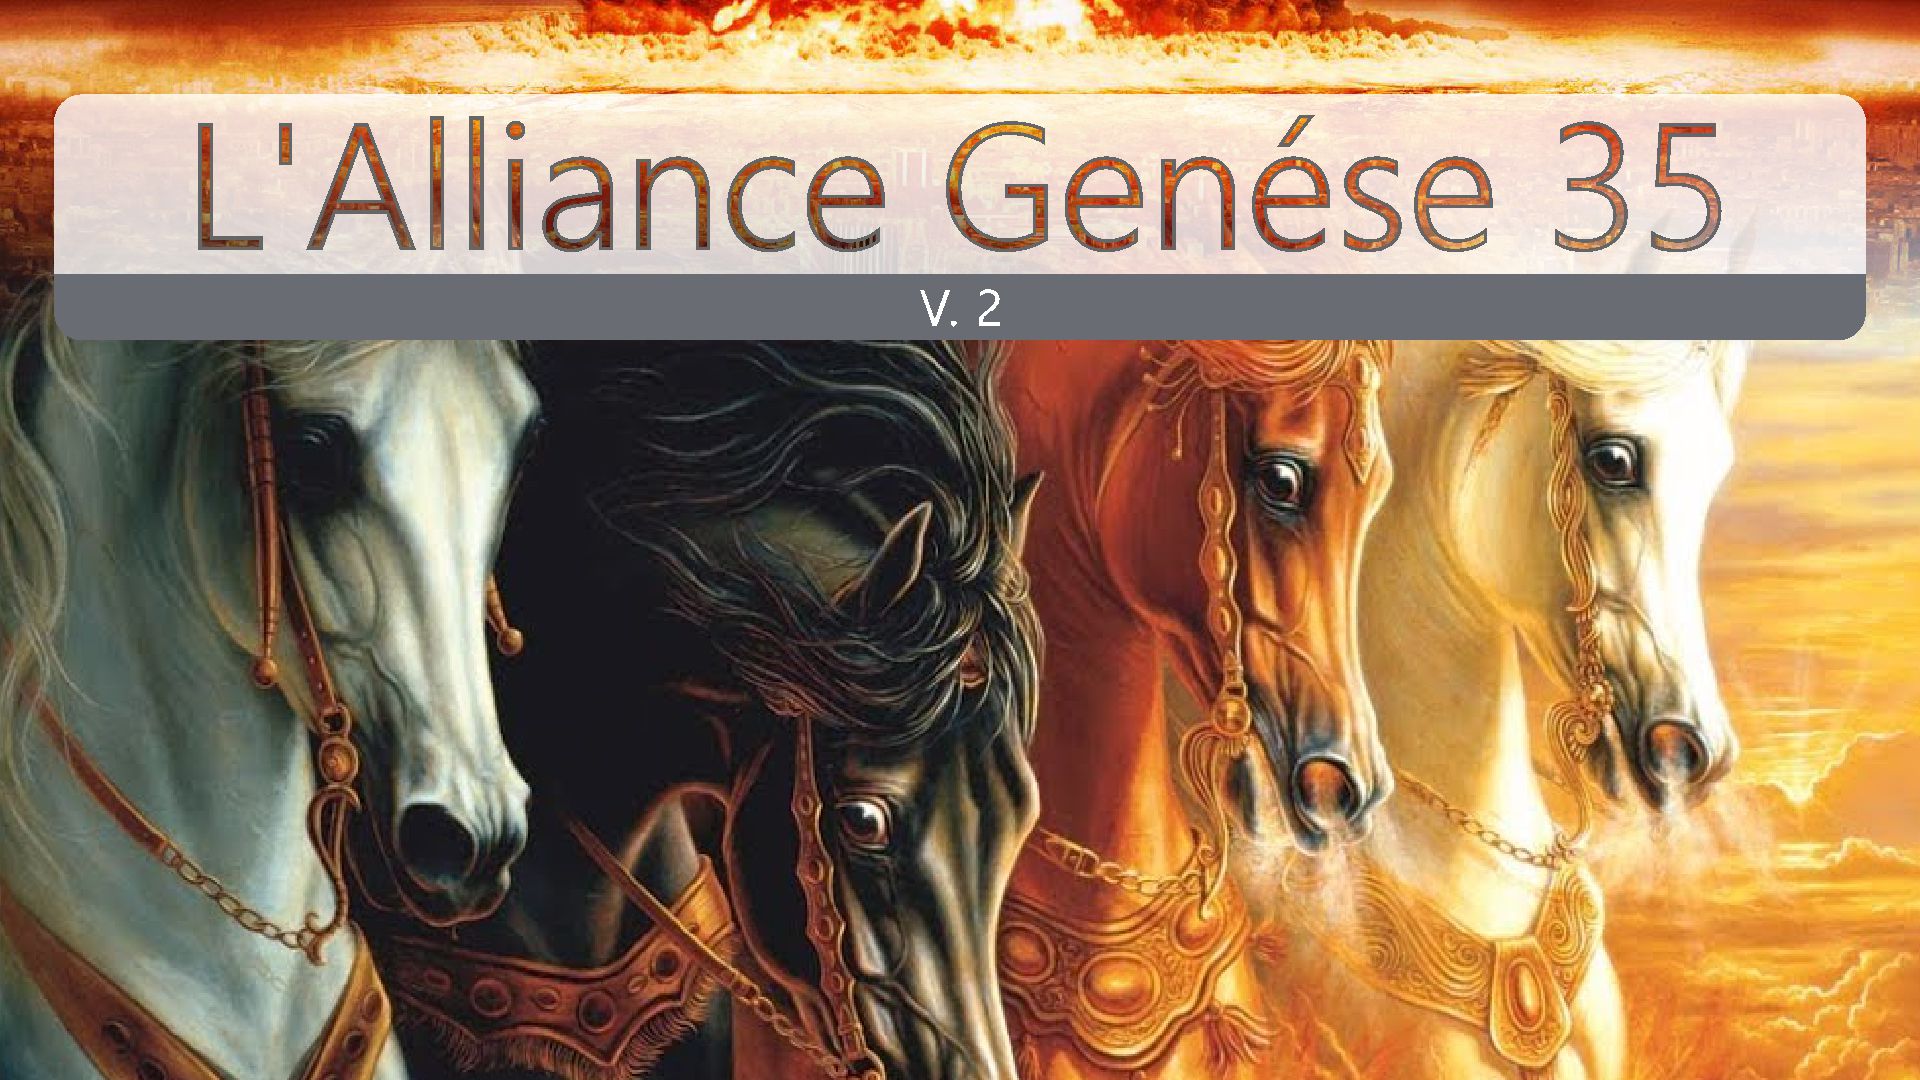 L'Alliance Genesis 35 v2